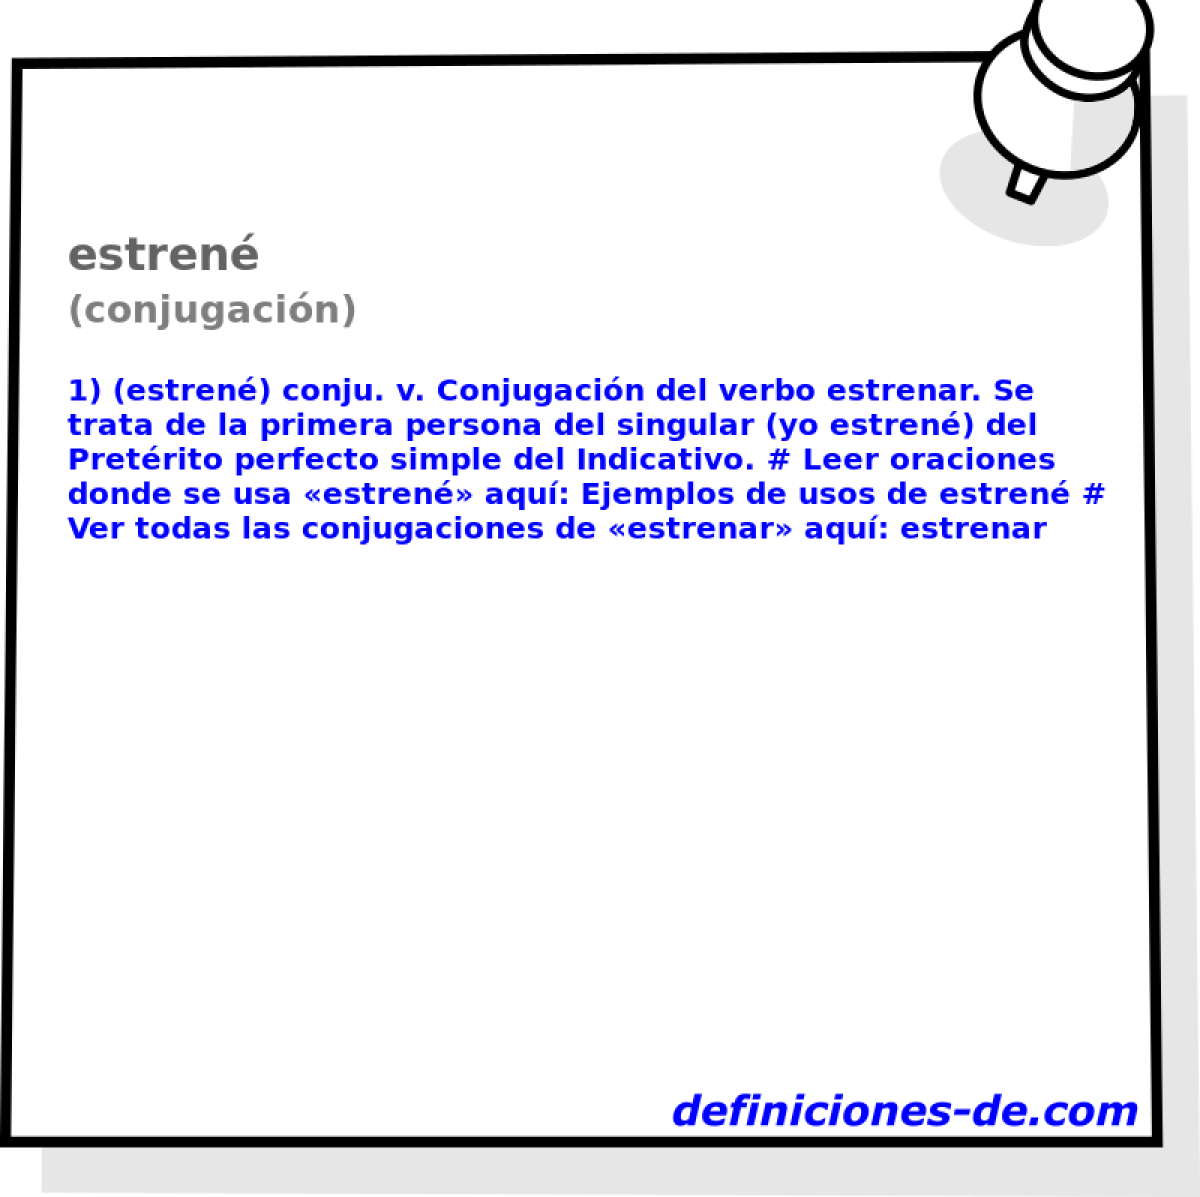 estren (conjugacin)